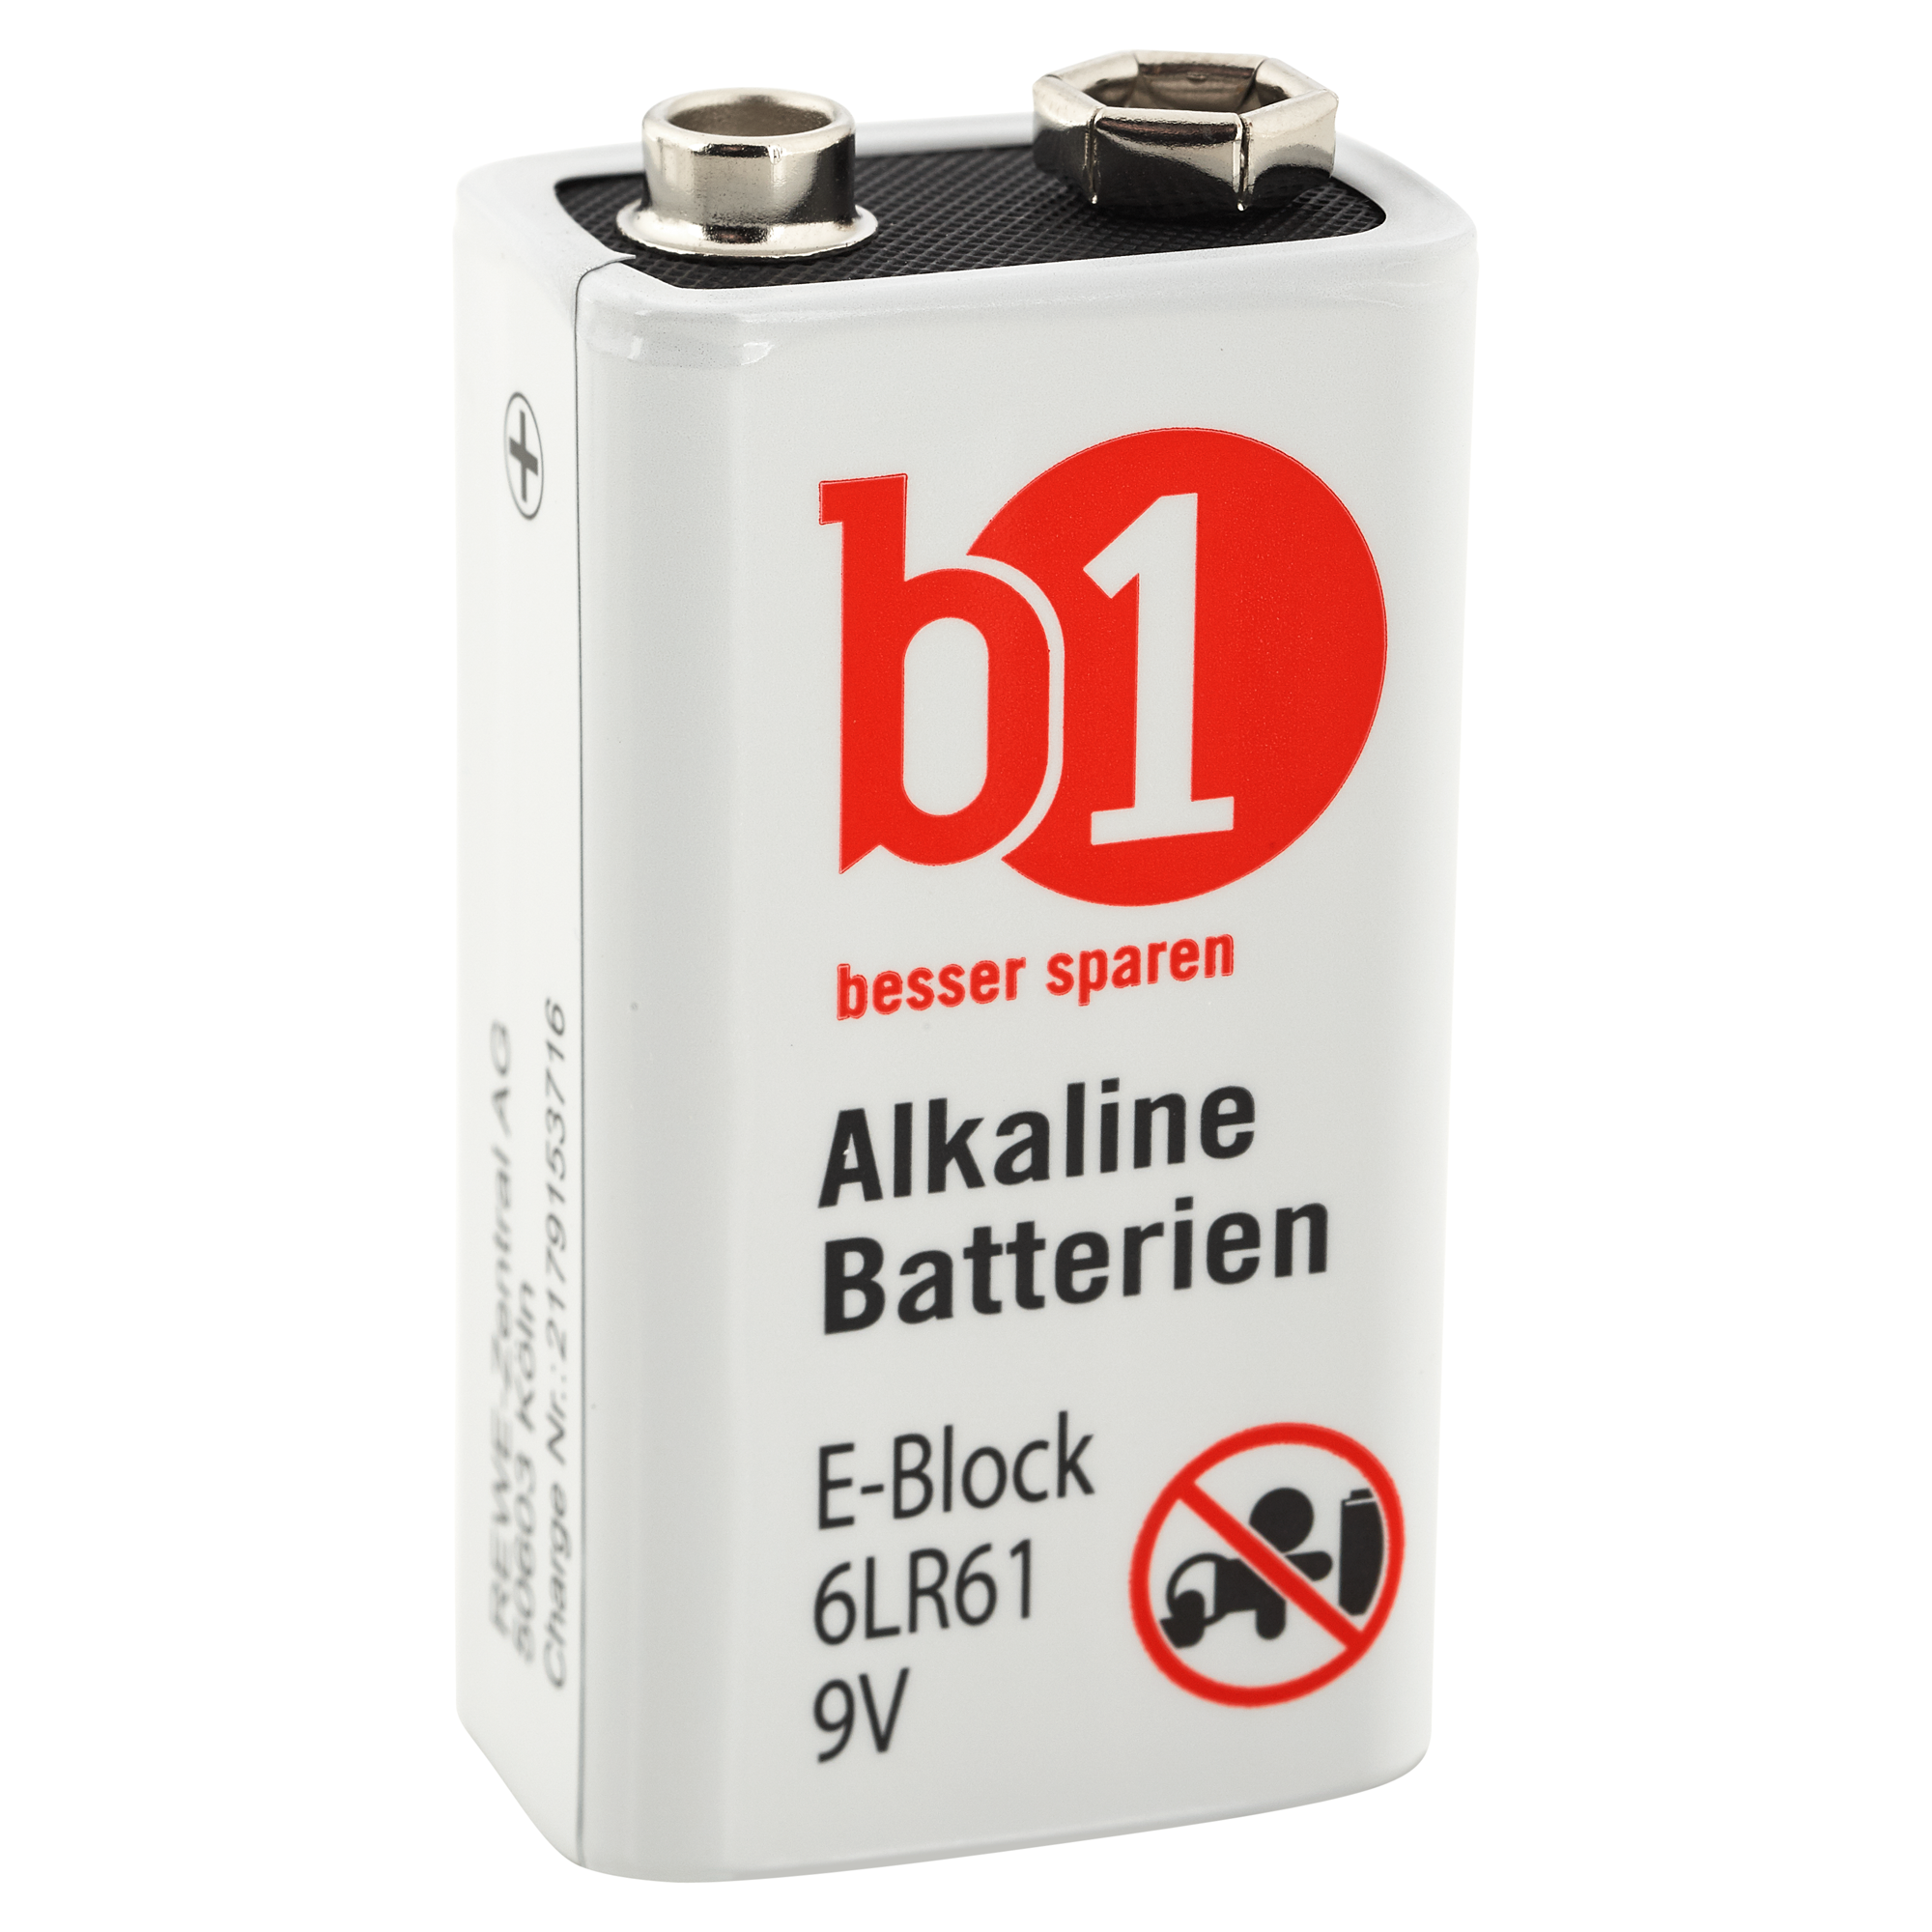 Alkaline Batterien E-Block 6LR61 9 V 2 Stück + product picture